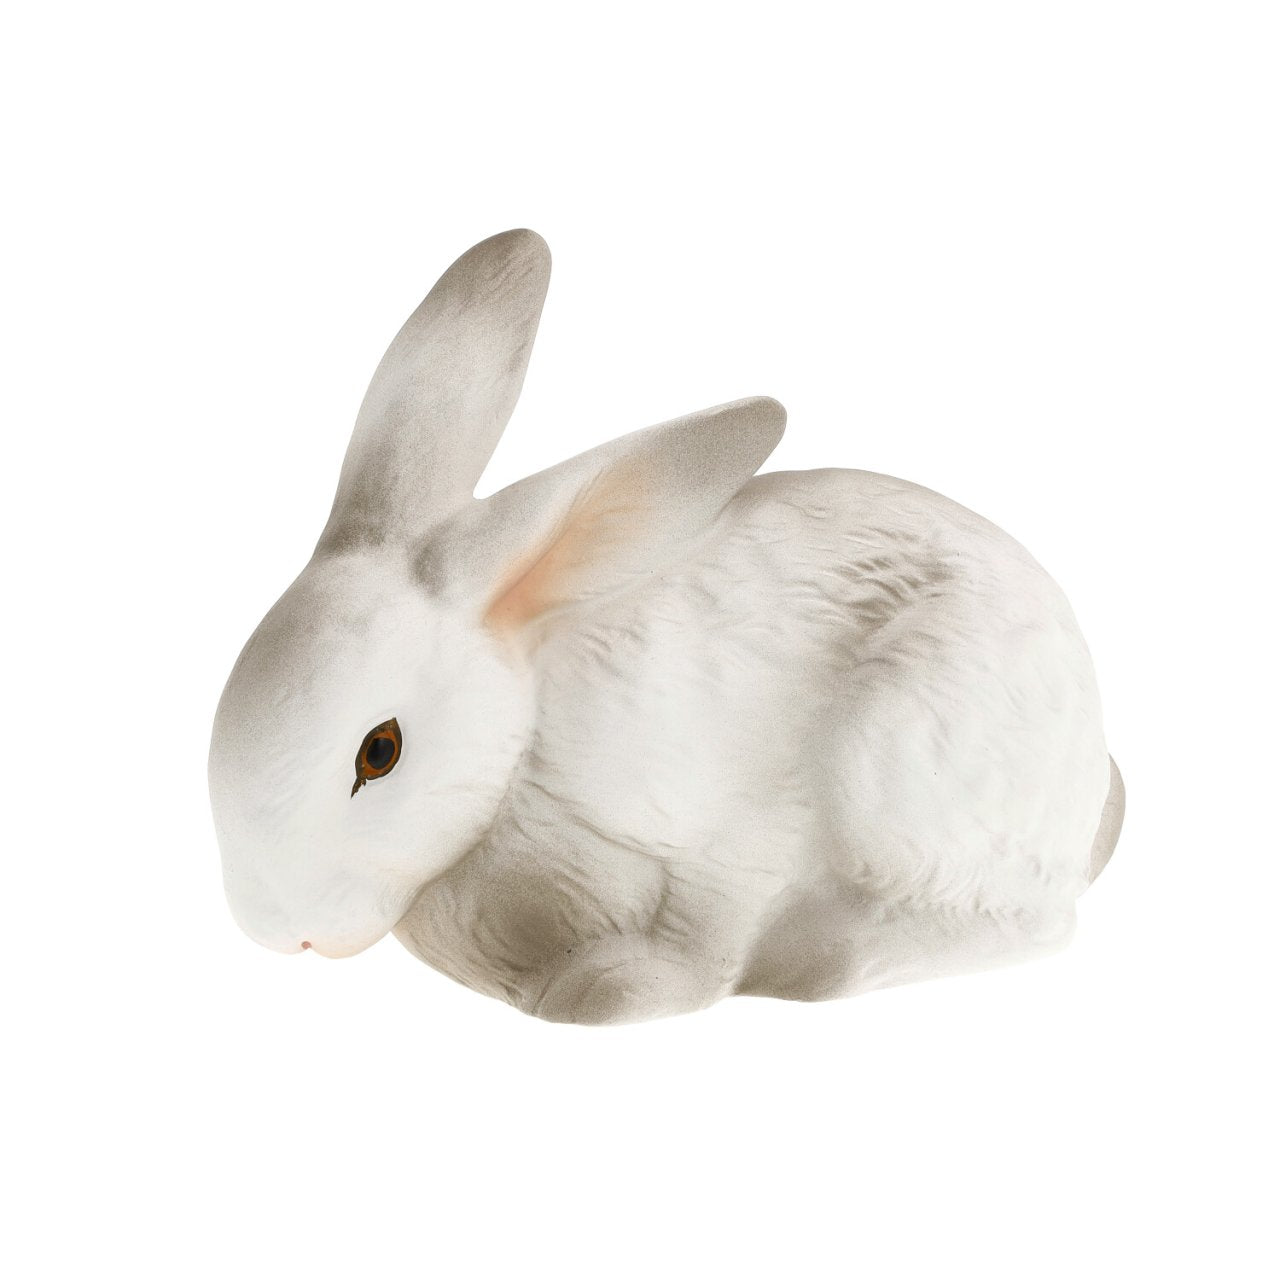 Cowering White Rabbit by Marolin Manufaktur